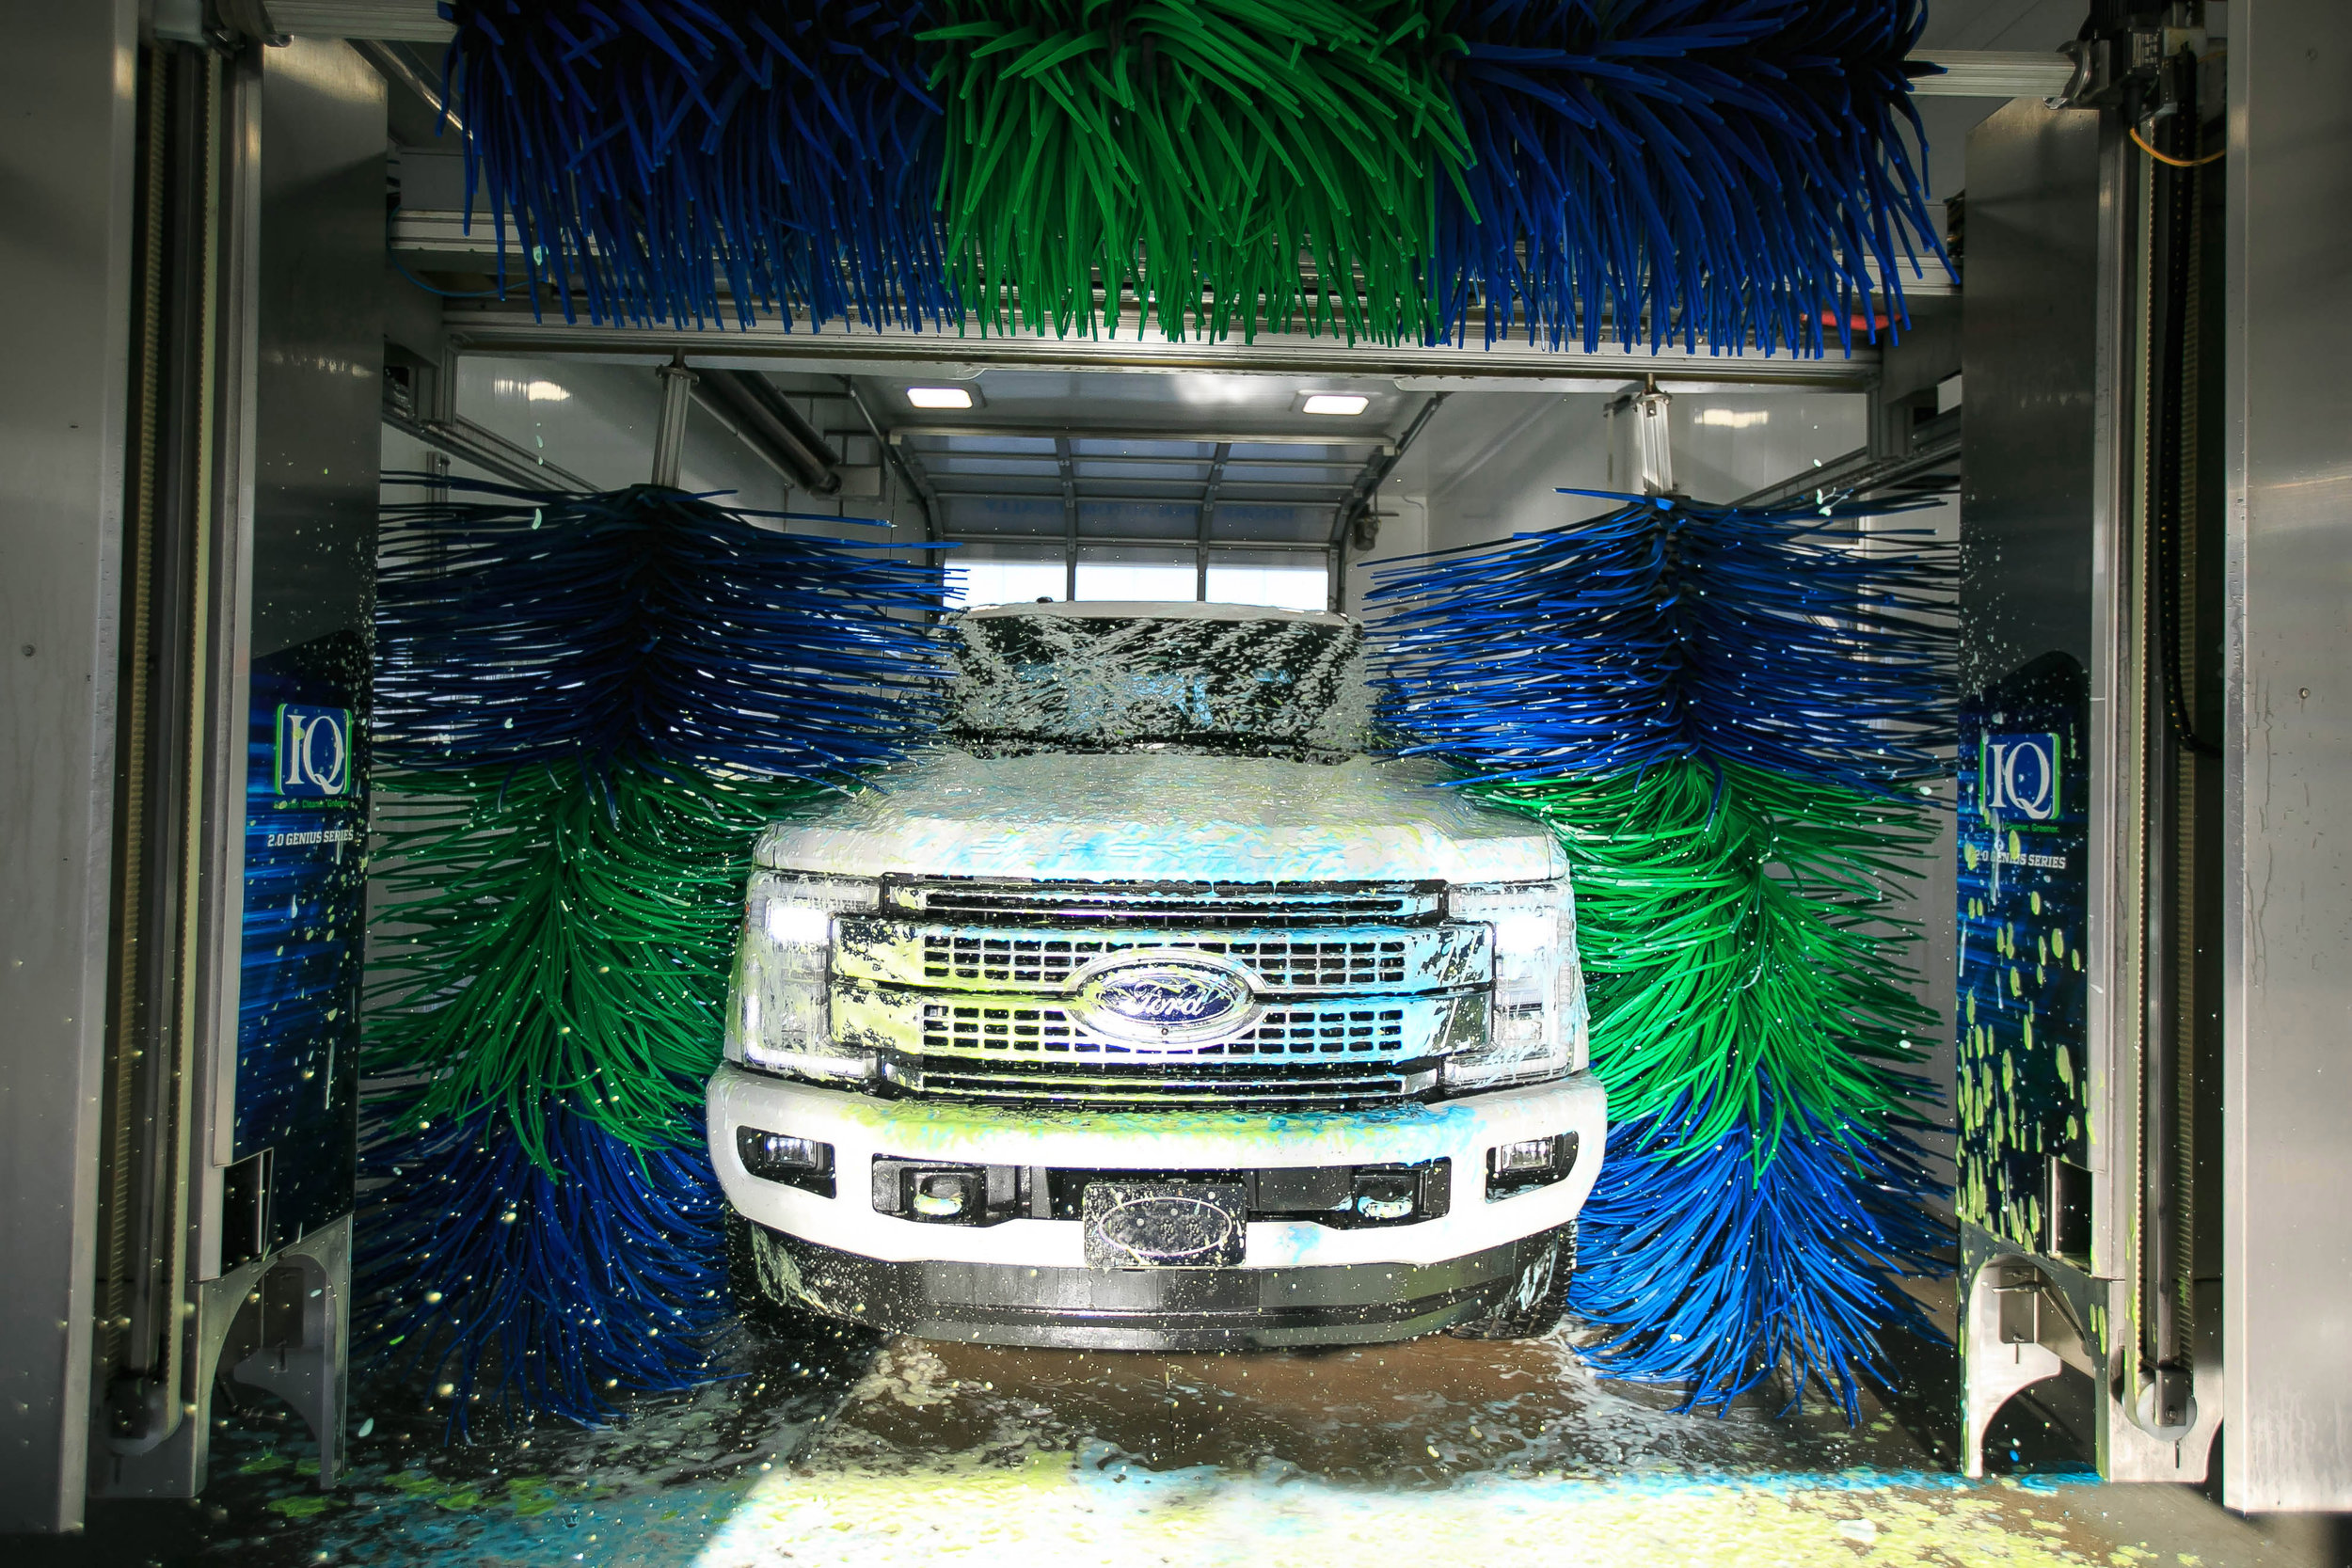 Home - D&S Car Wash